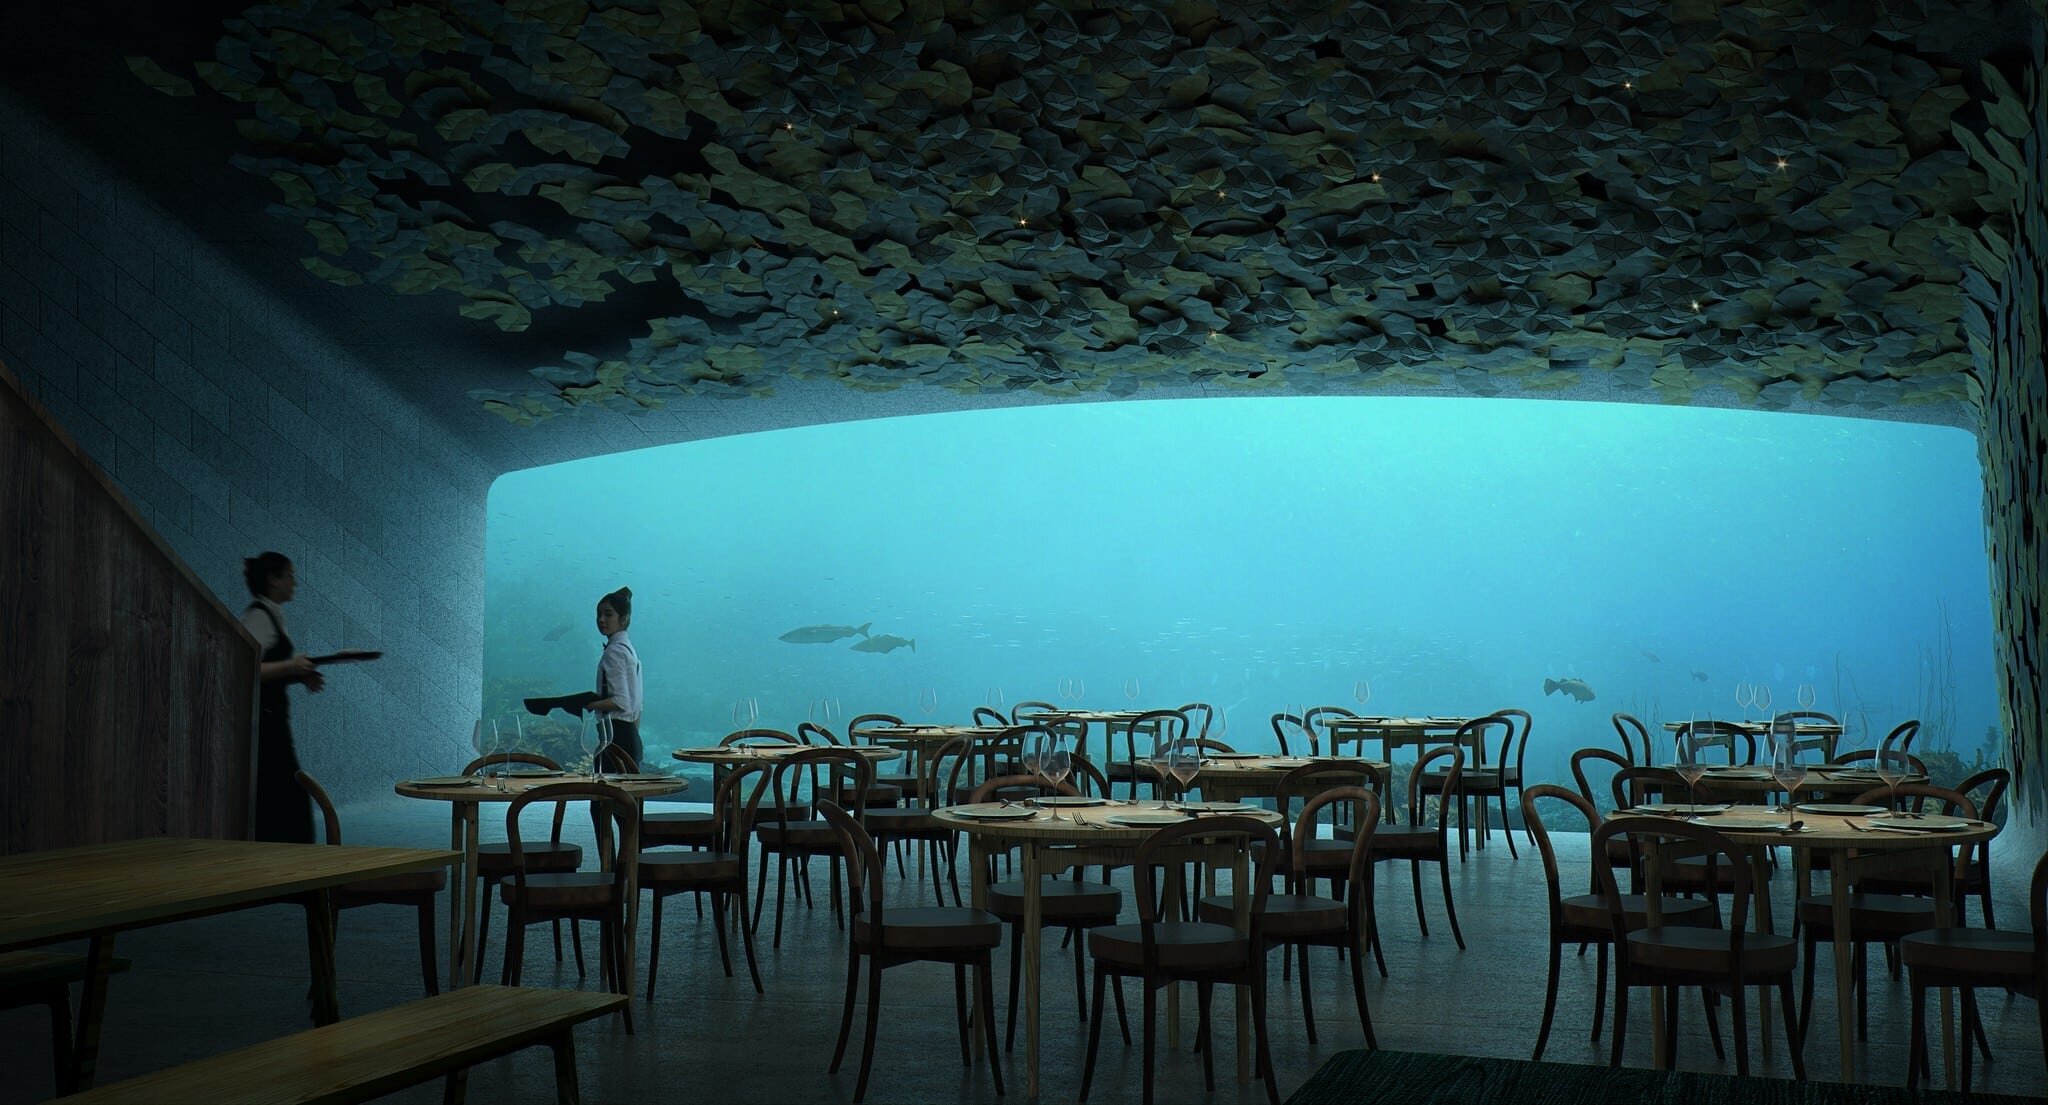 More information about "“Under” - Το πρώτο υποβρύχιο Restaurant στην Ευρώπη στη Νορβηγία"